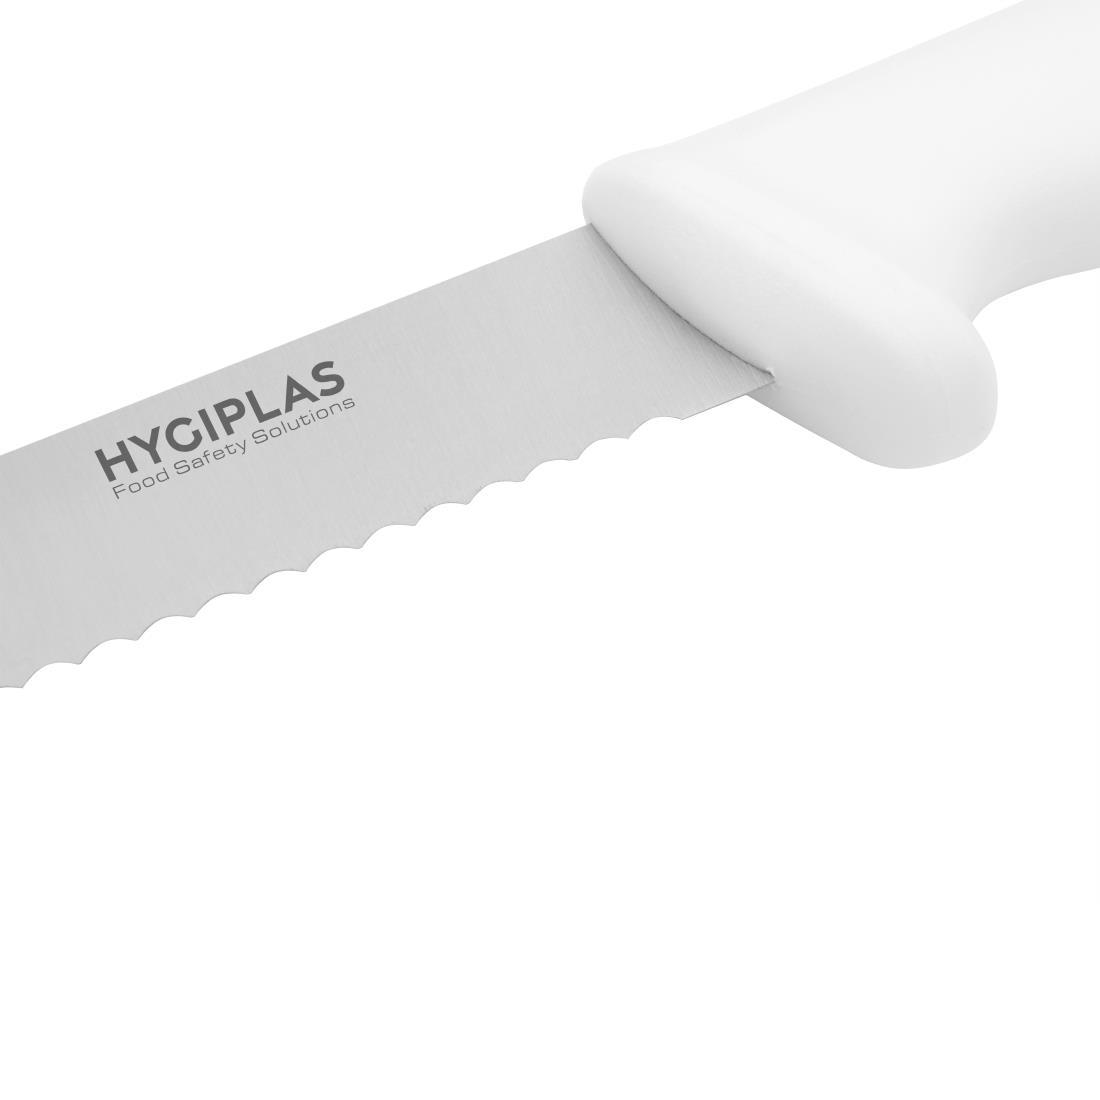 Hygiplas Bread Knife White 20.5cm - C882  - 3